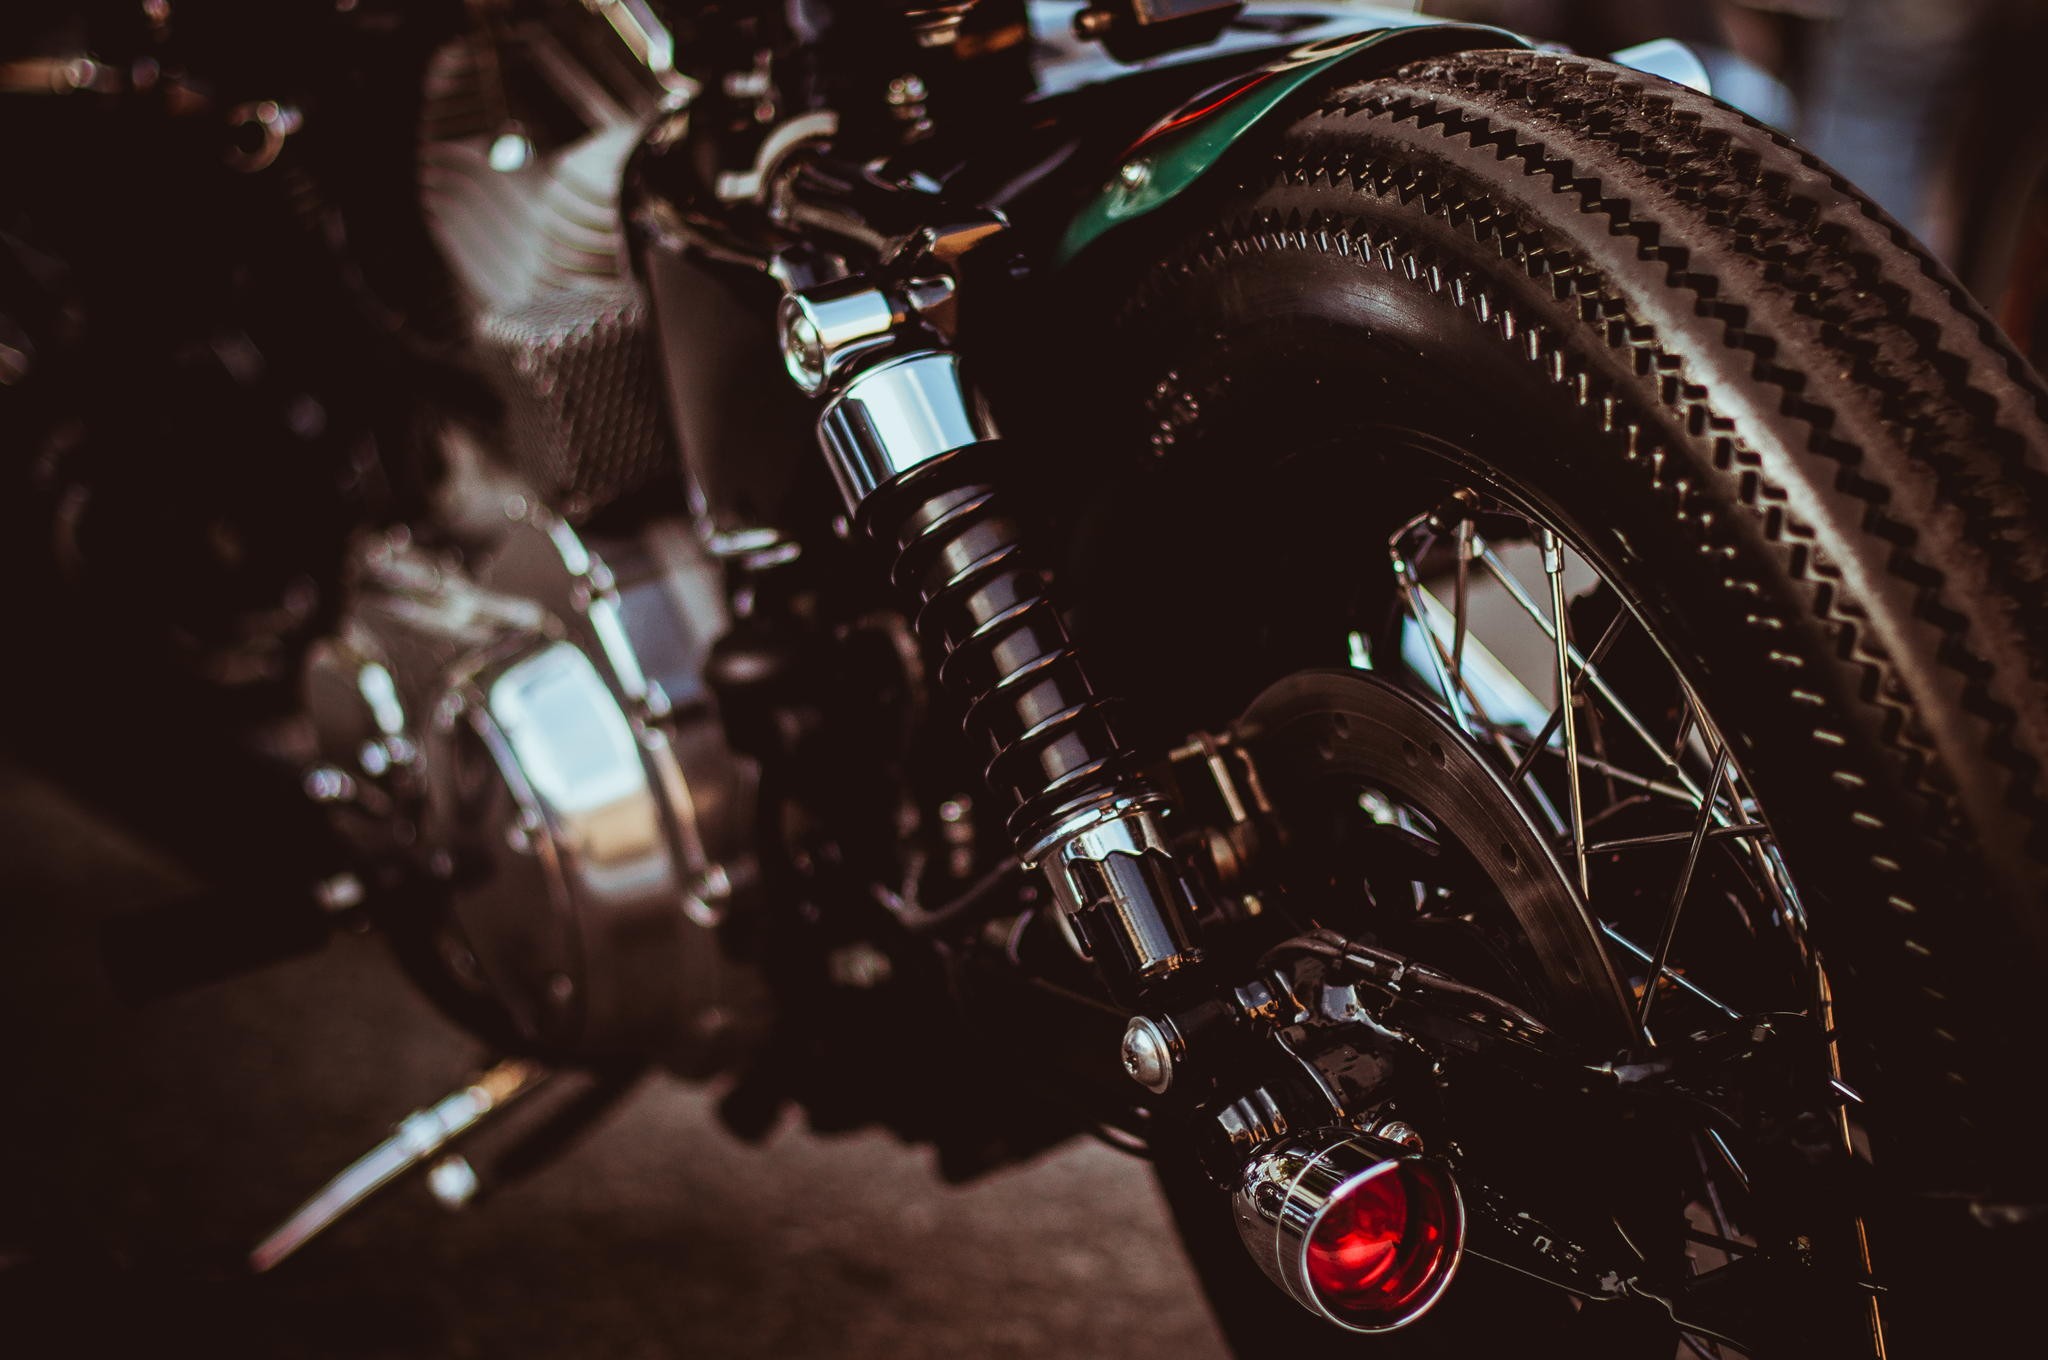 General 2048x1360 Harley-Davidson vehicle American motorcycles wheels motorcycle closeup depth of field